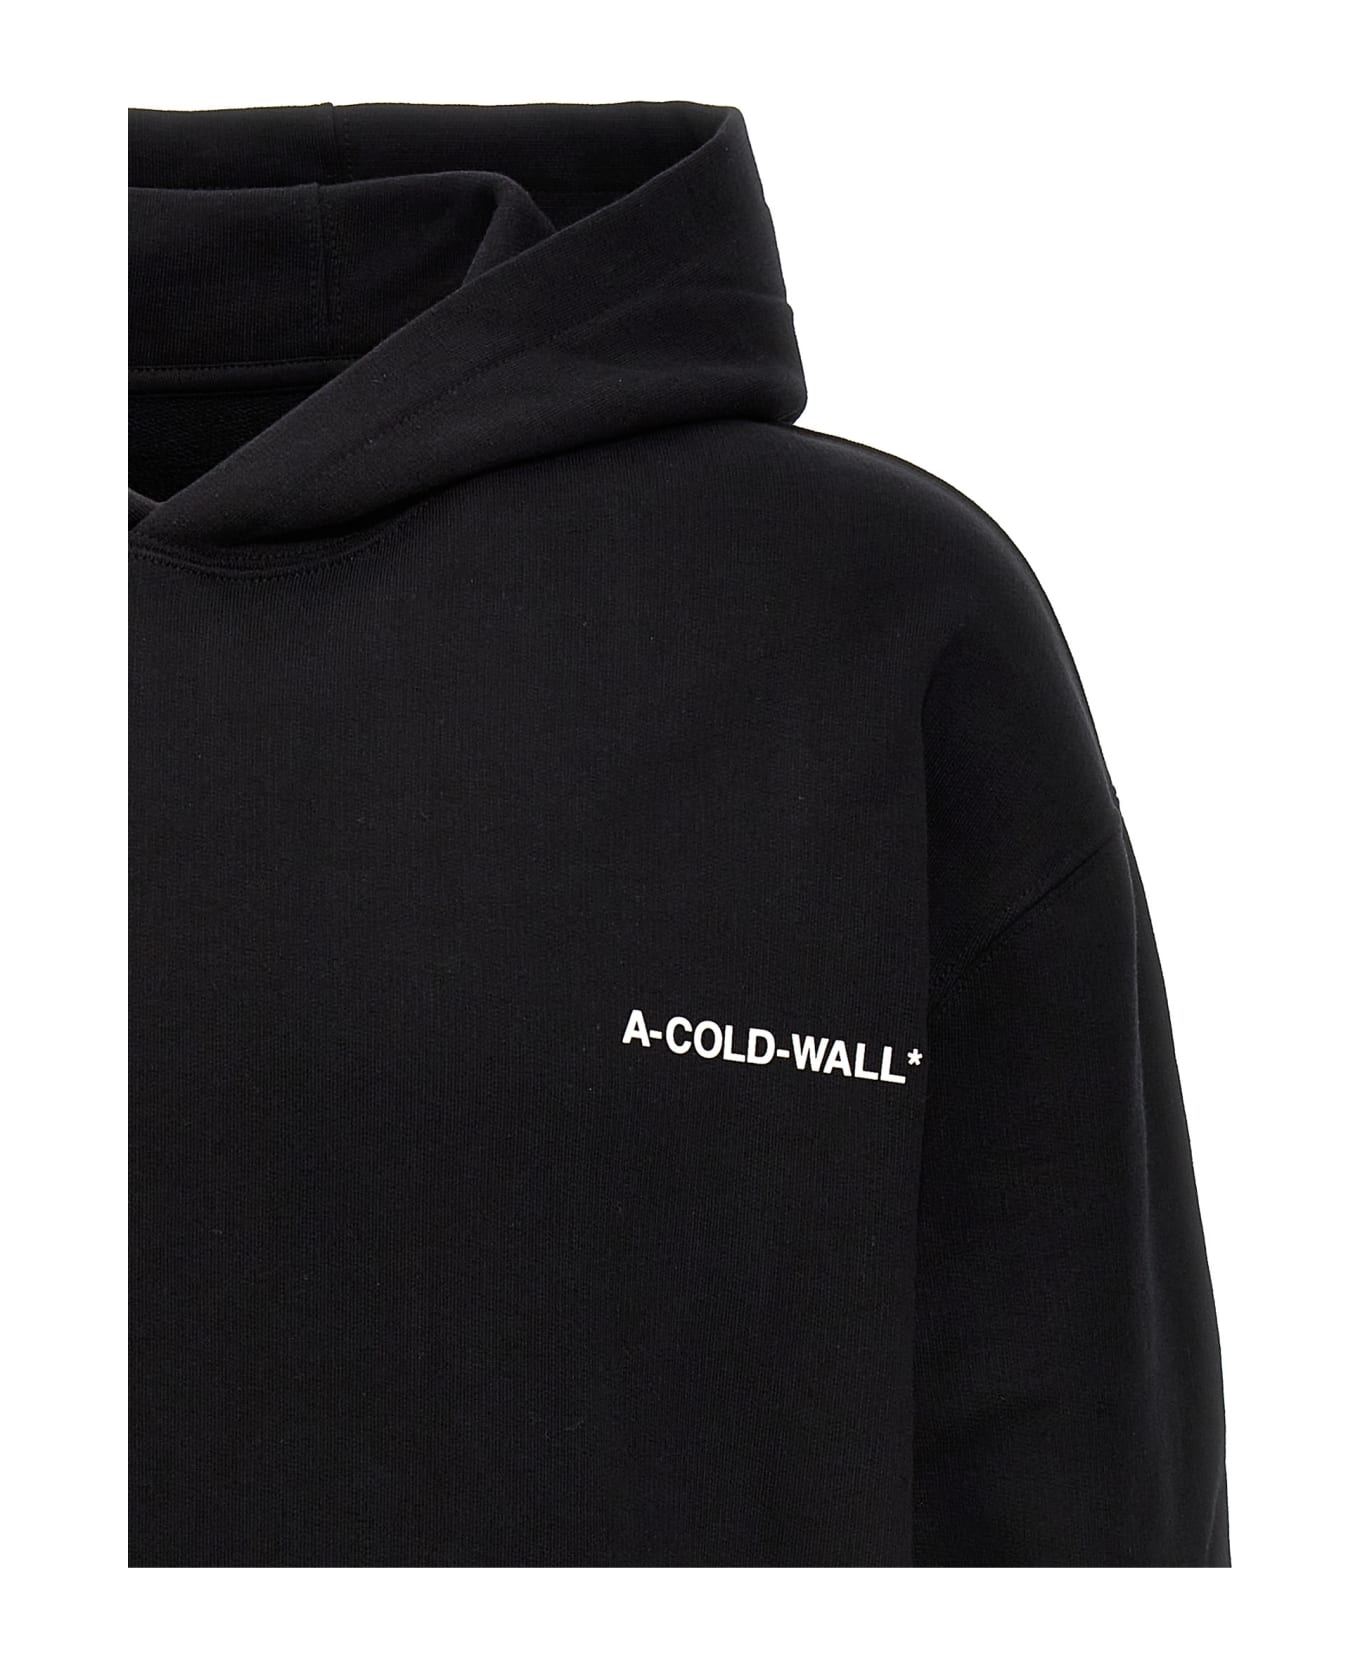 A-COLD-WALL 'essential Small Logo' Hoodie - Black   フリース